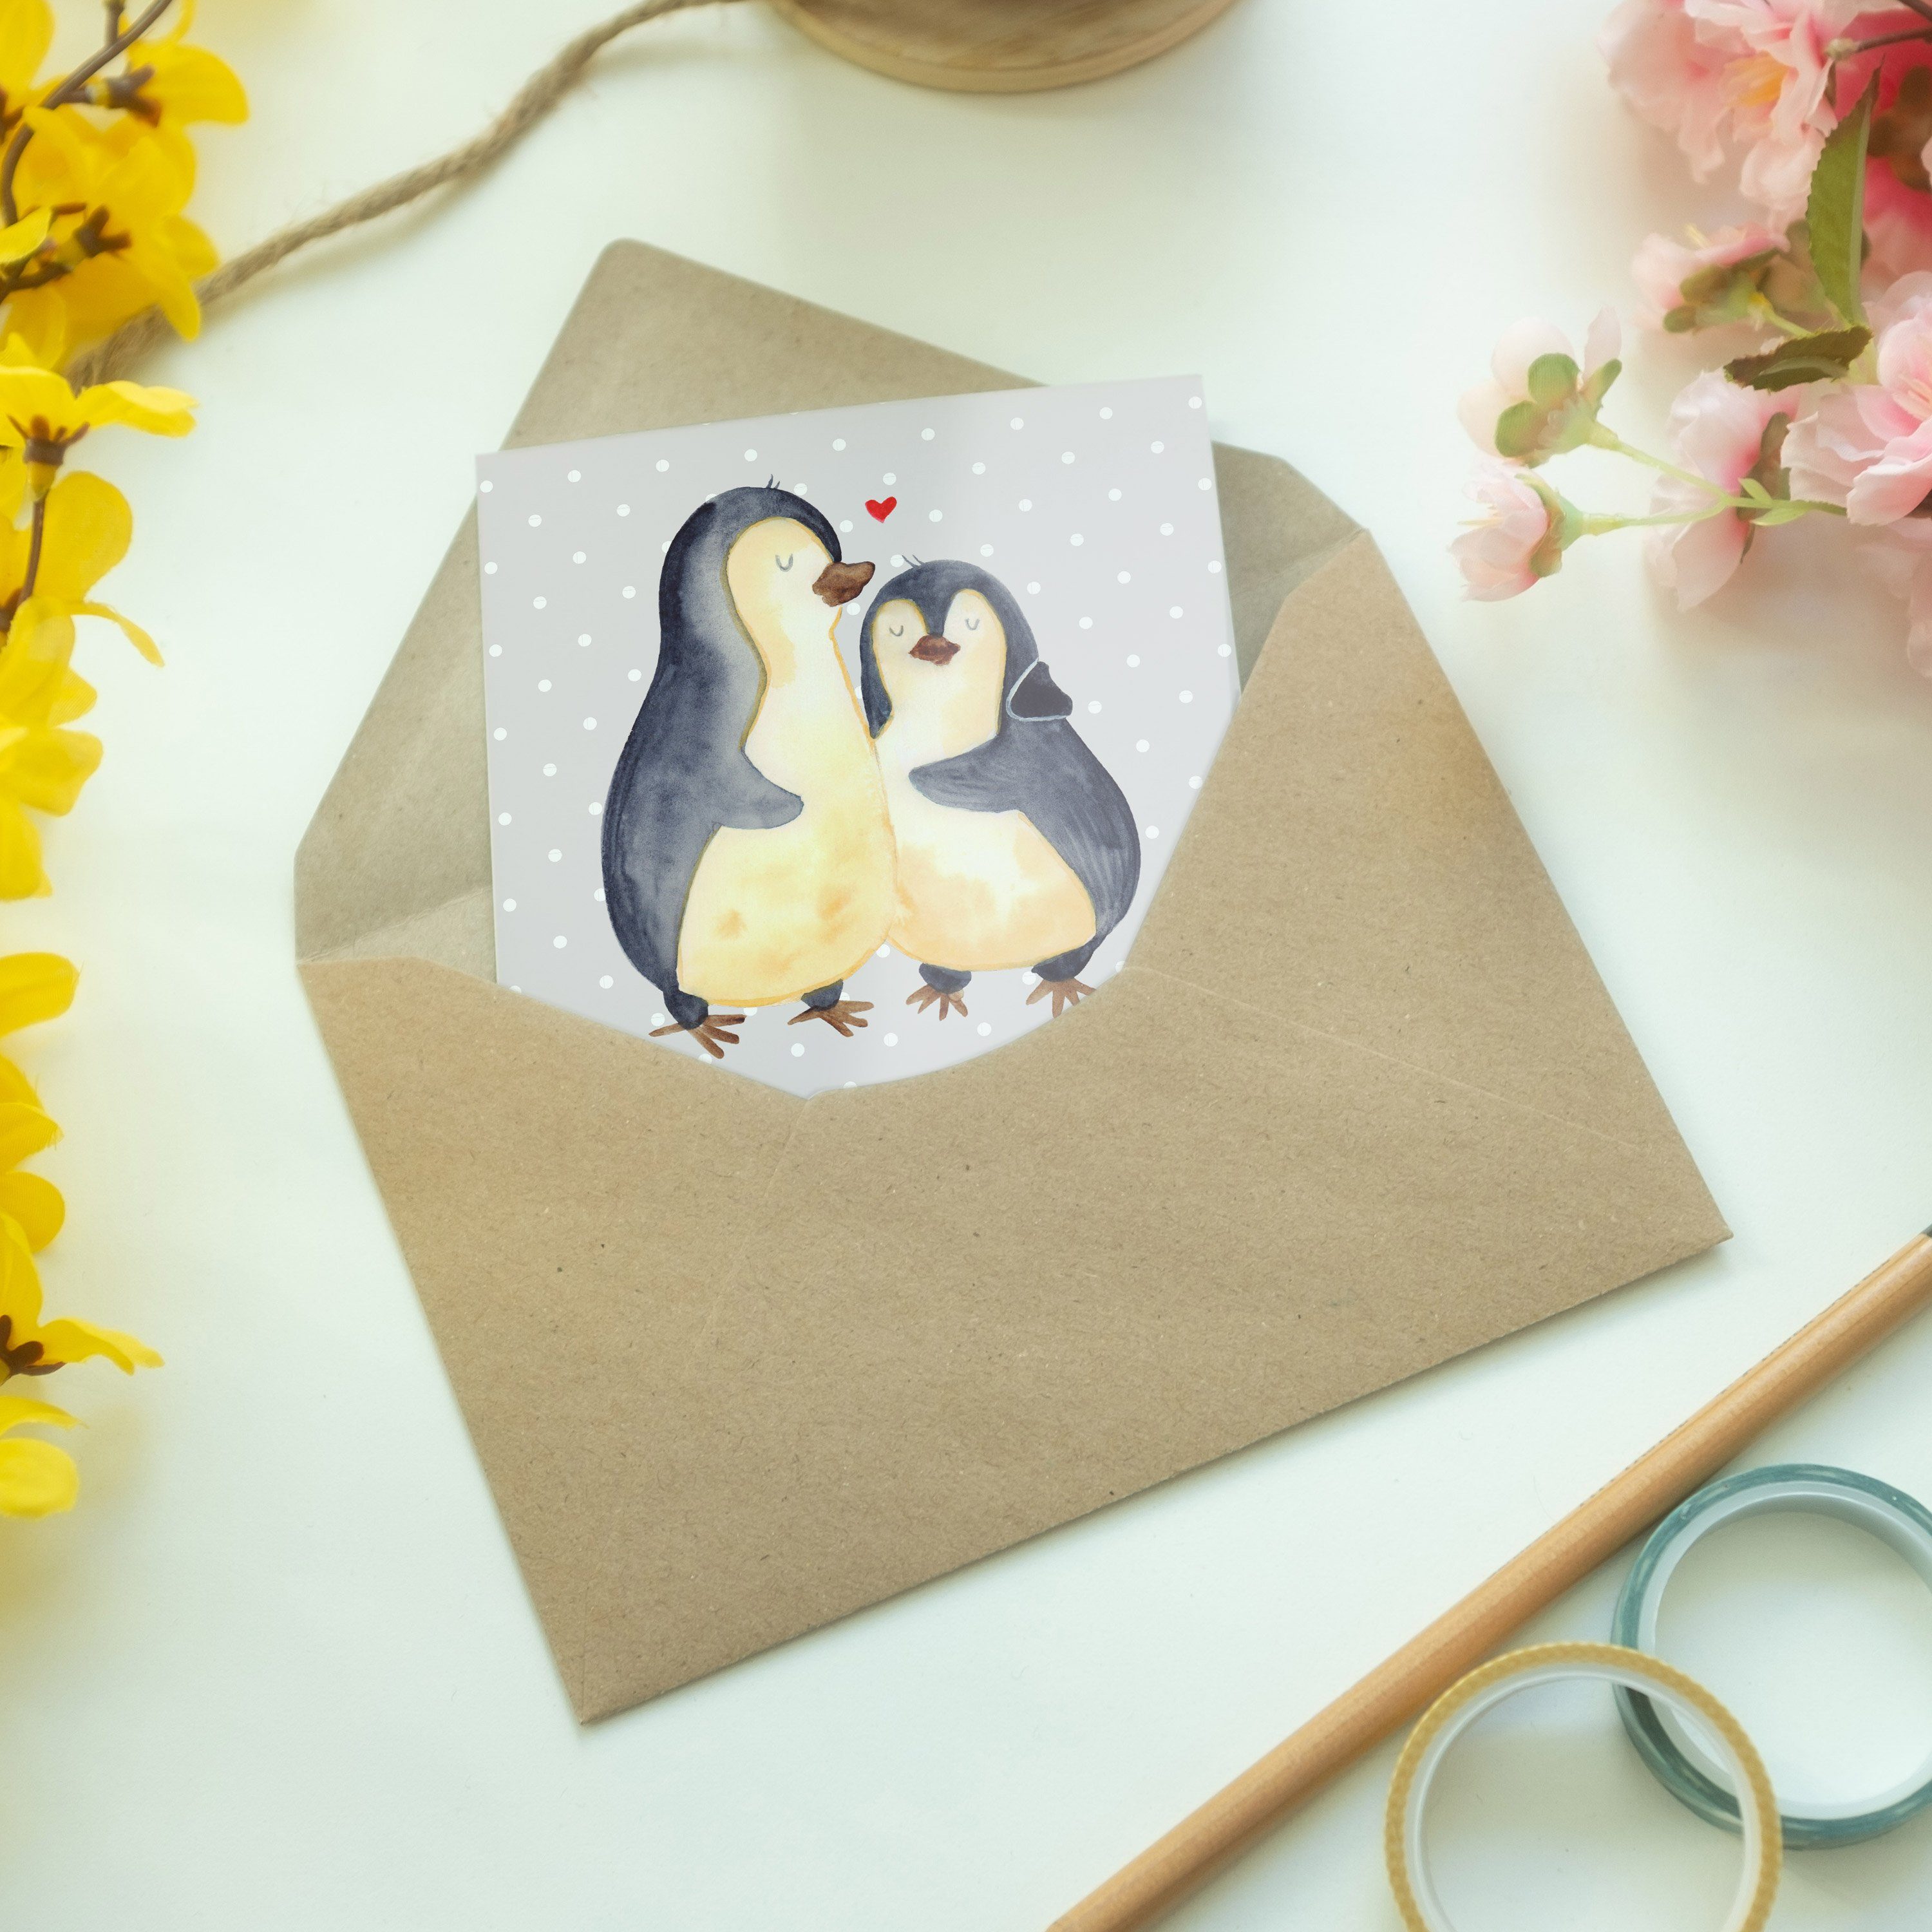 Lebens & Mr. Panda Danke, Bester Pastell der Pinguin - Welt Geschenk, - Mann Mrs. Grau Grußkarte